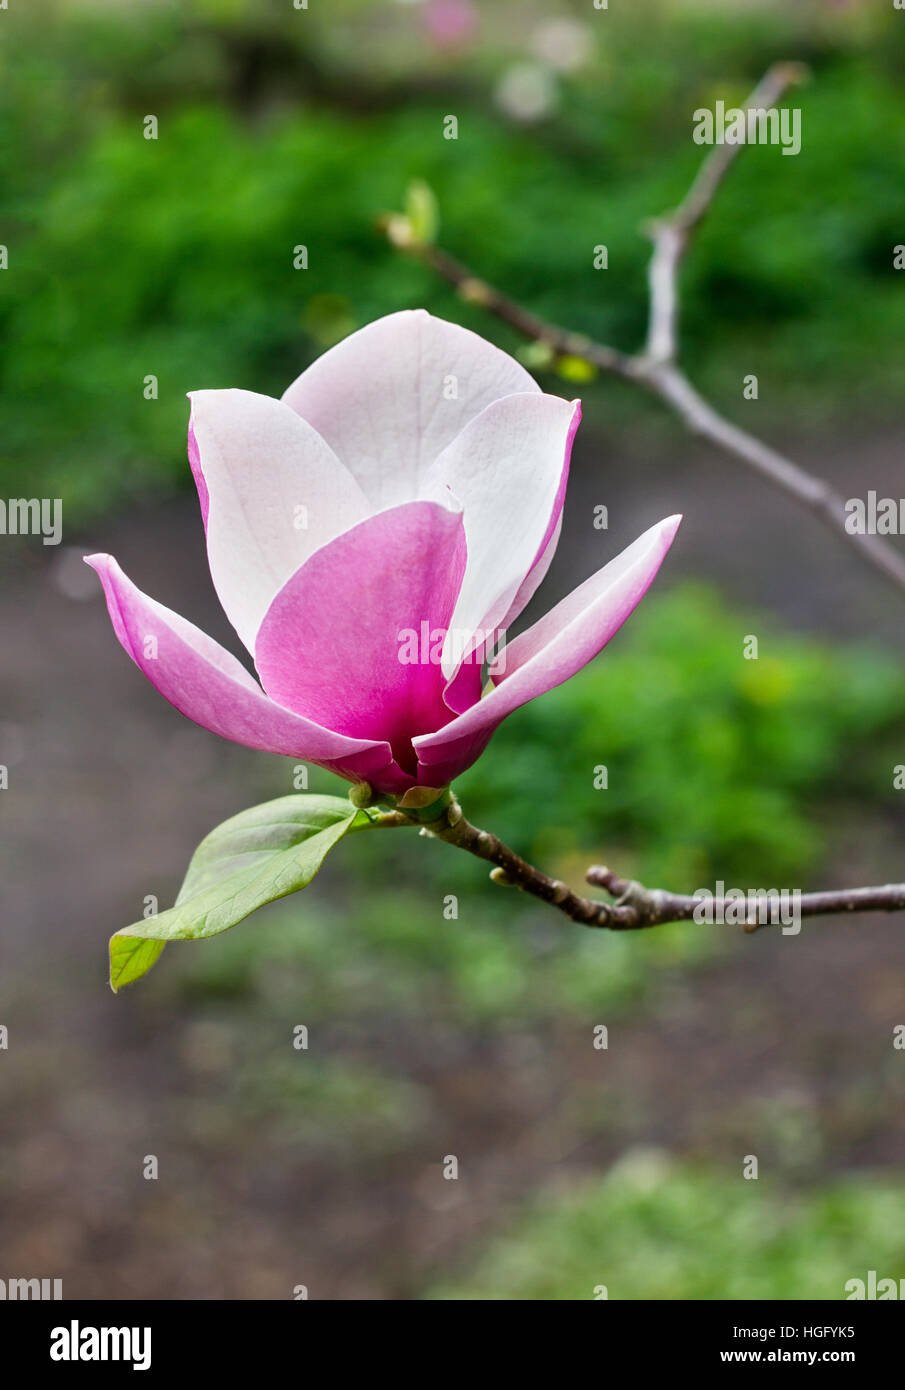 One flower of magnolia tree in spring garden Stock Photo